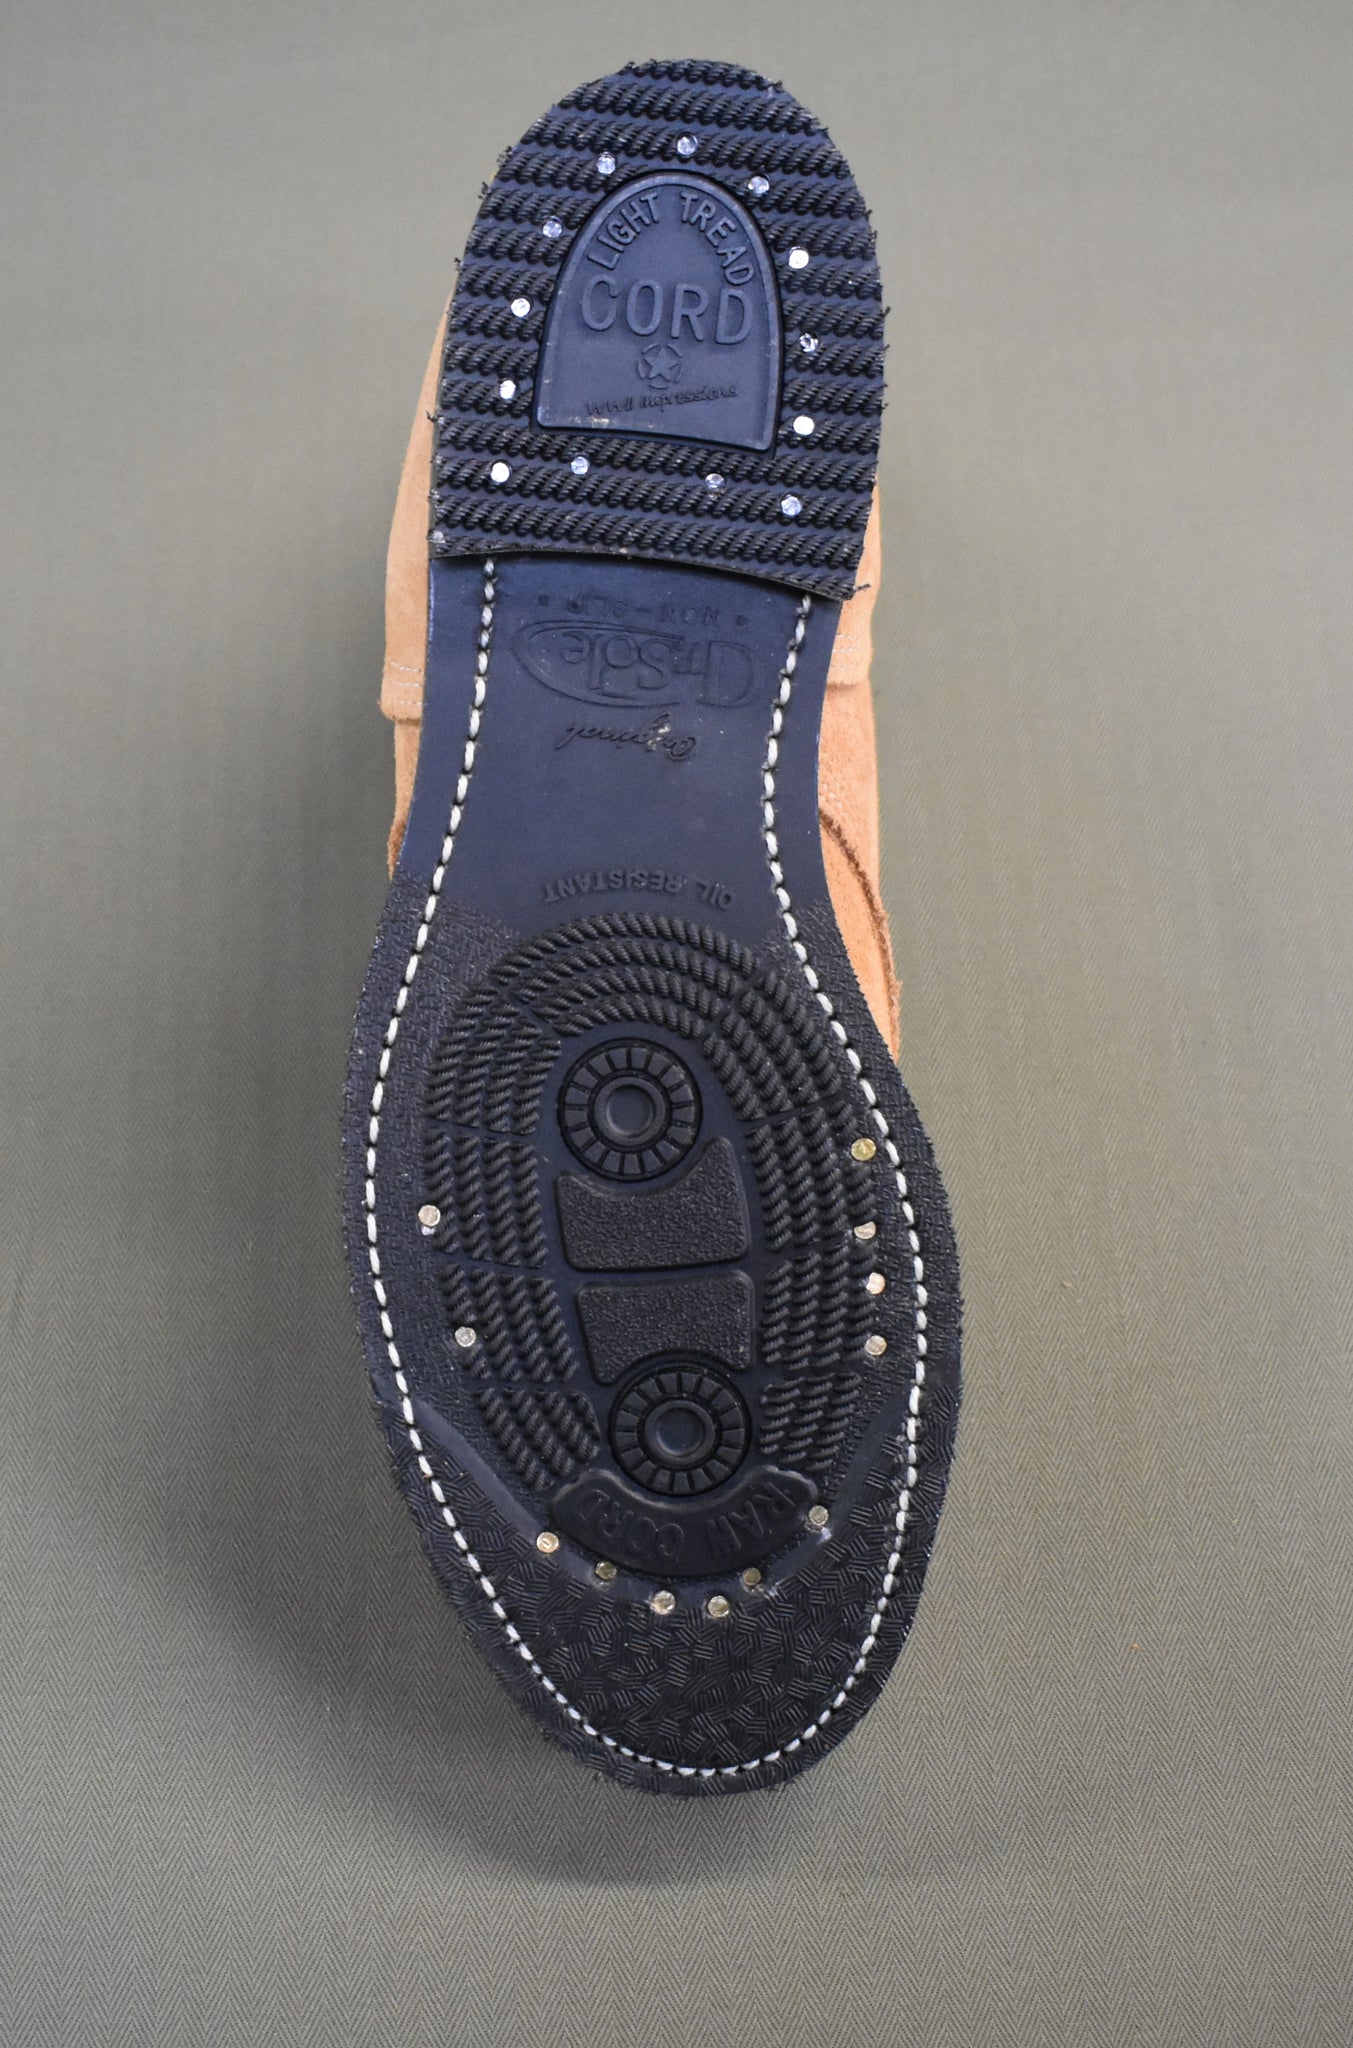 Shoes, Service, Boondocker, USN/USMC (Corded Heel)